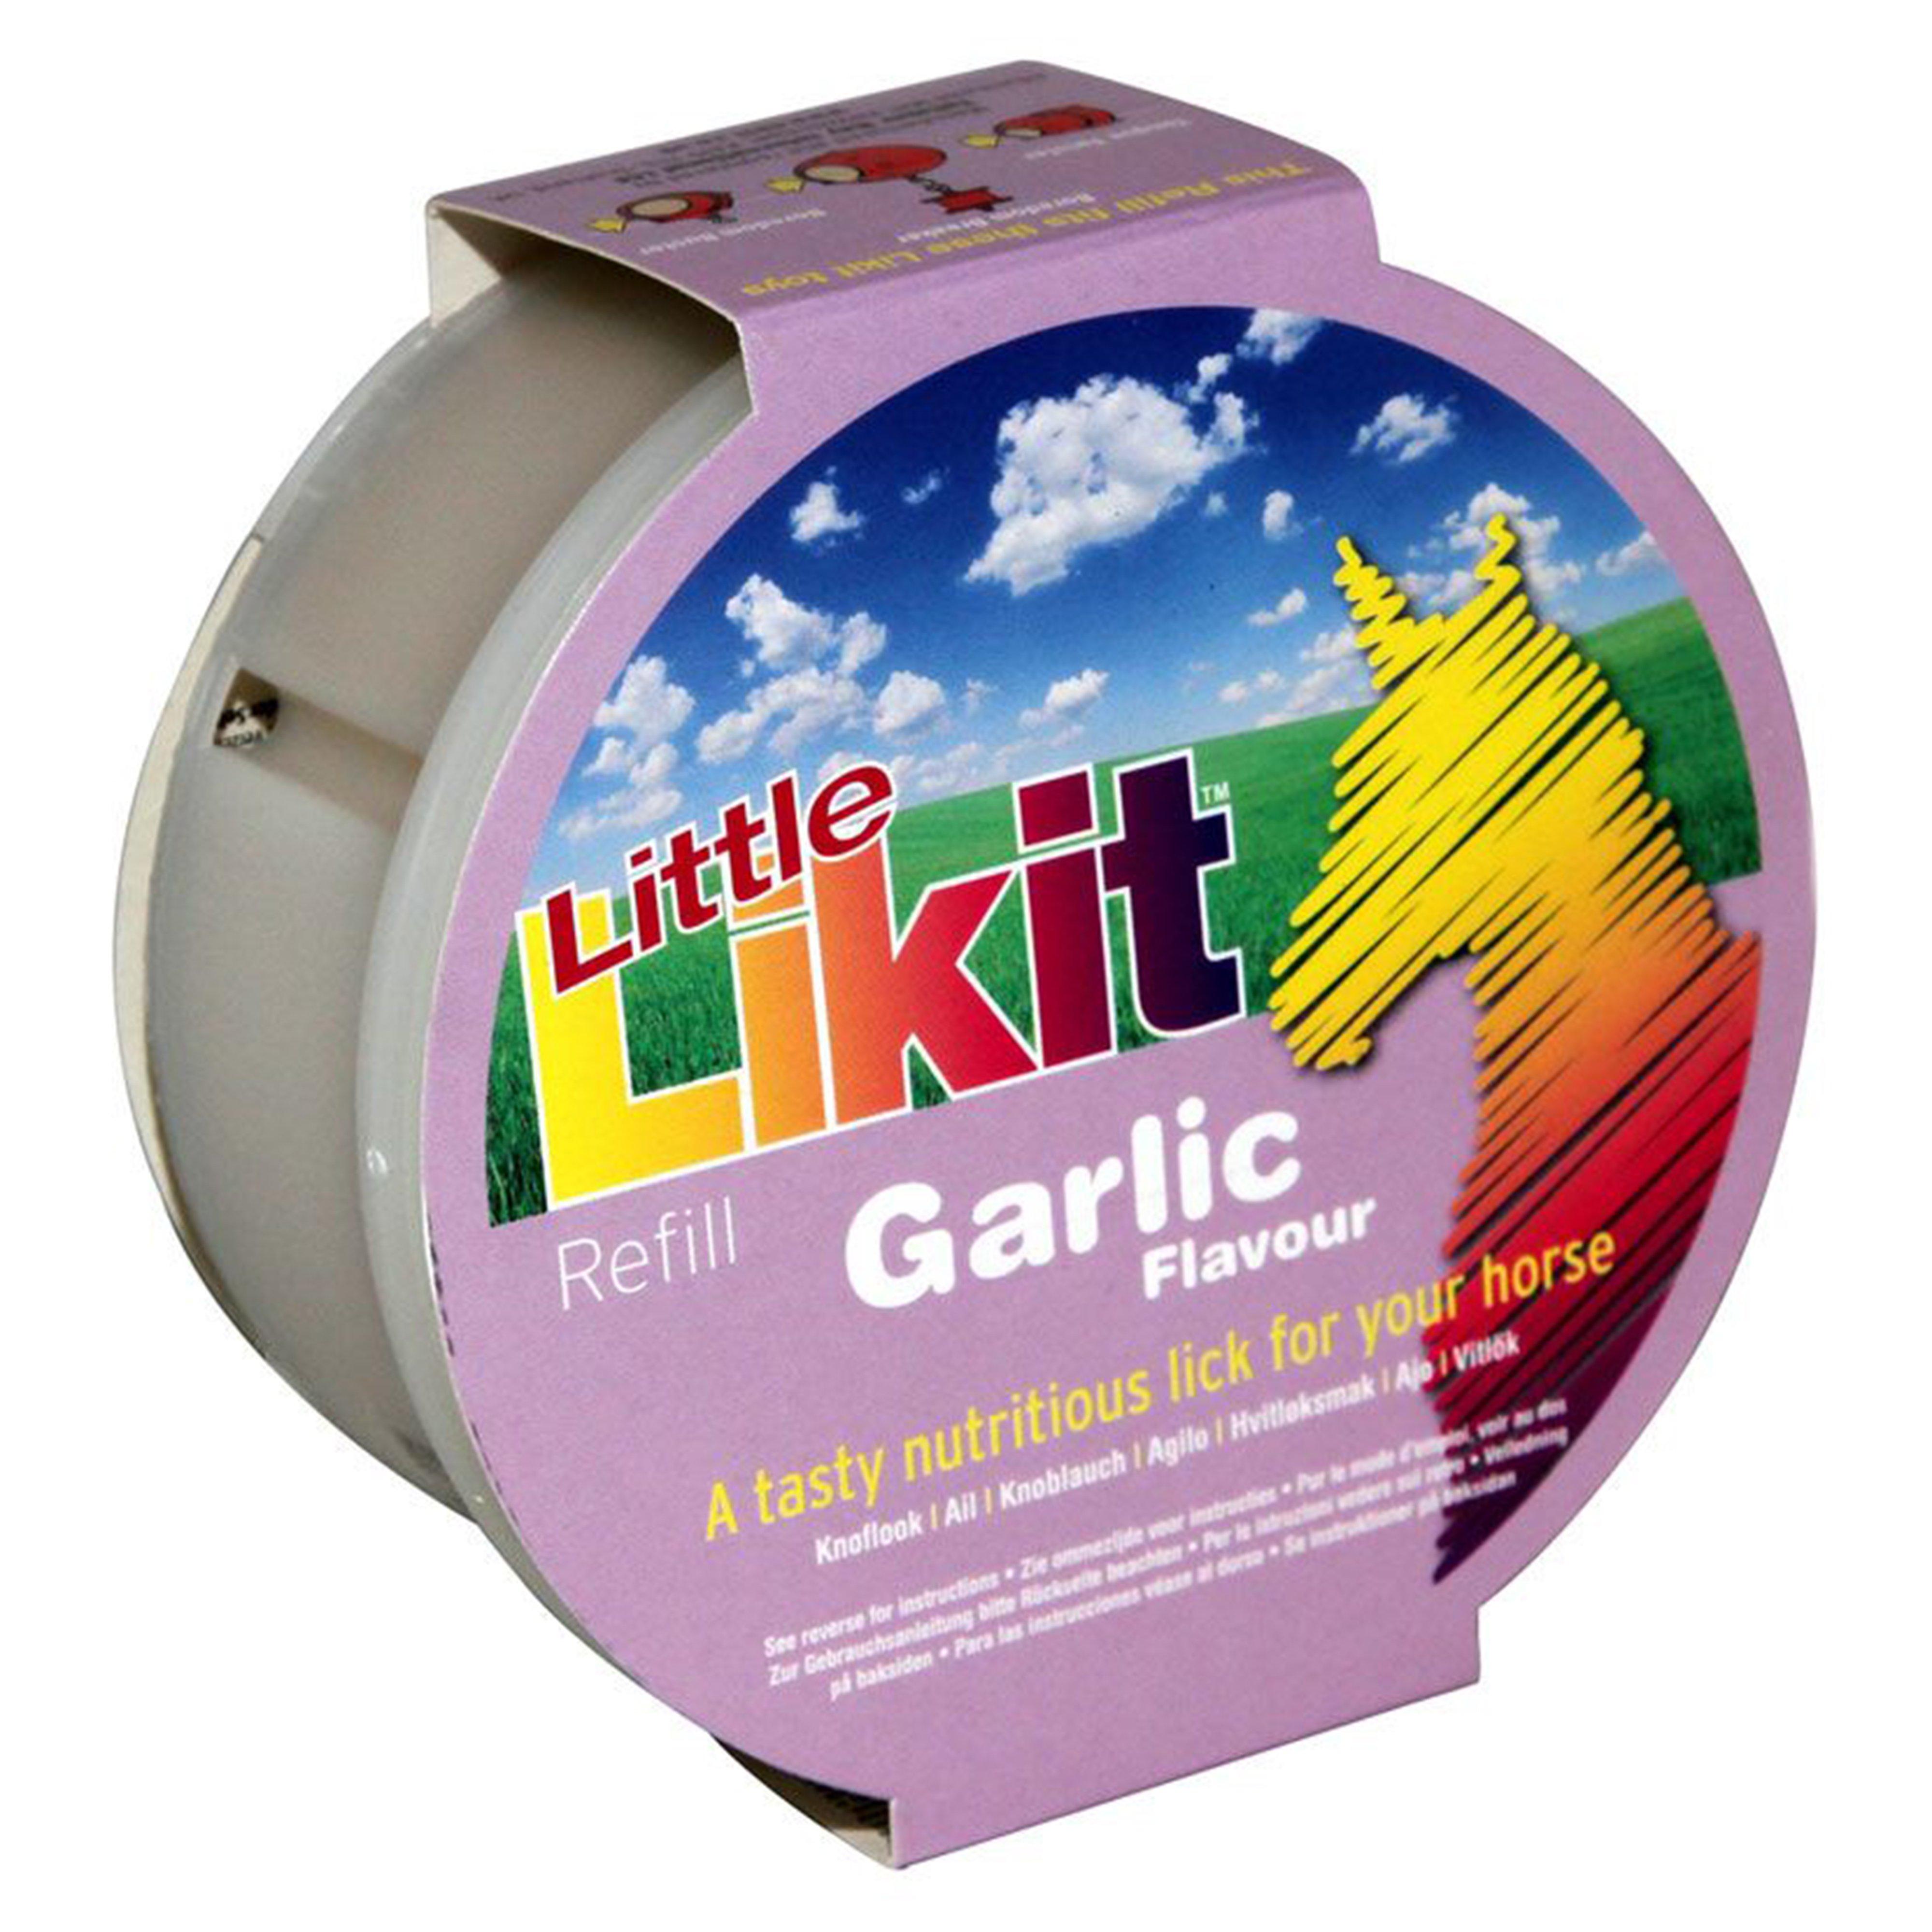 Little Likit Garlic